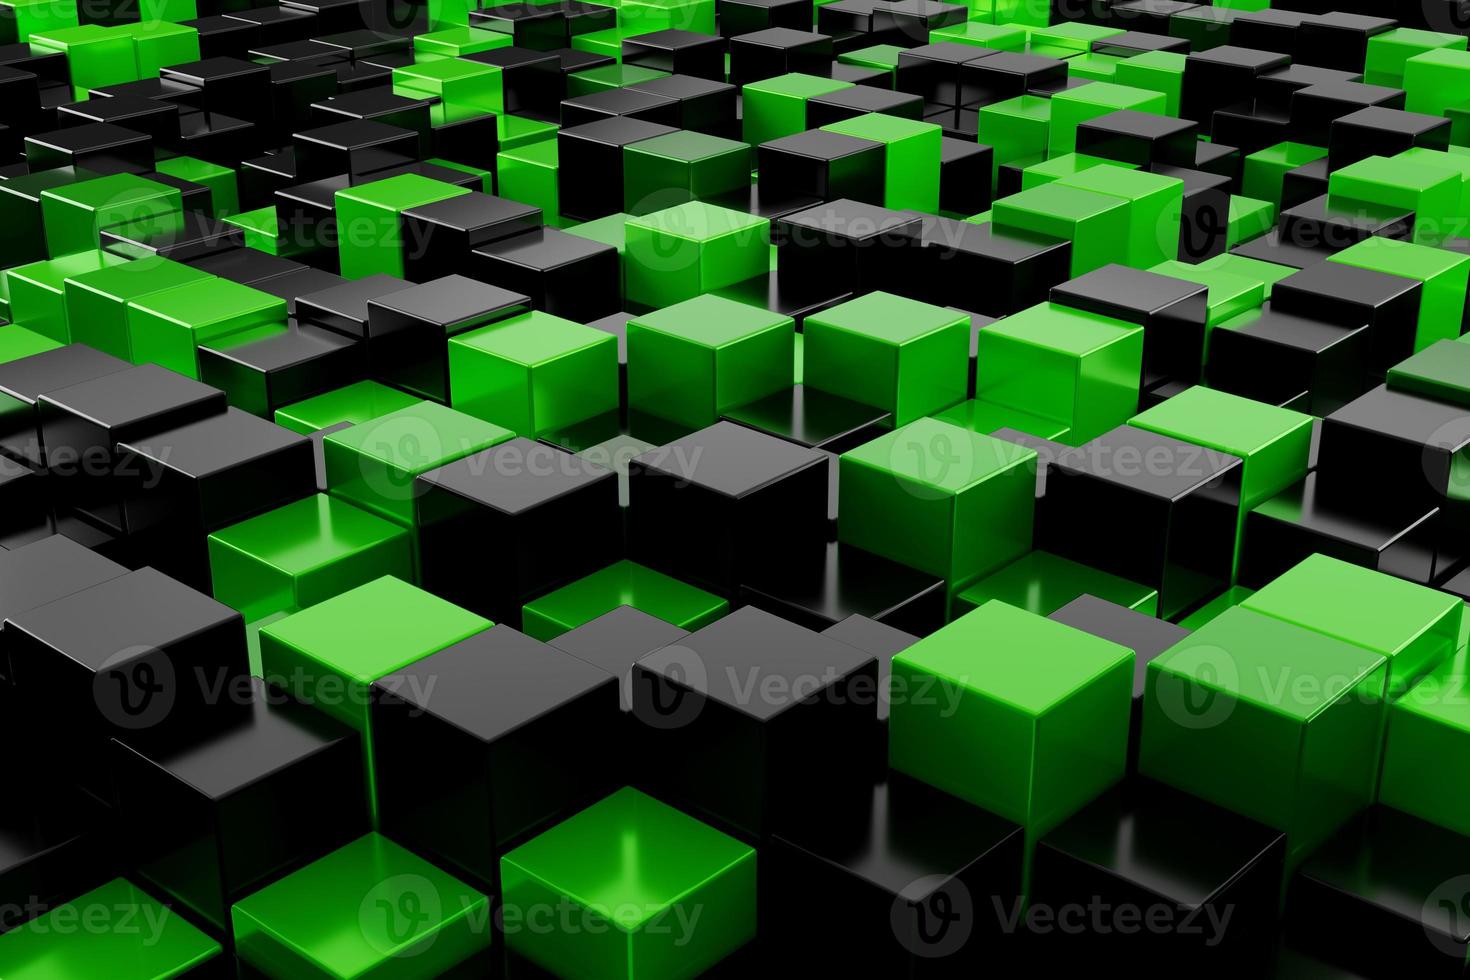 abstrakt trogen kuber, teknologi bakgrund 3d illustration foto